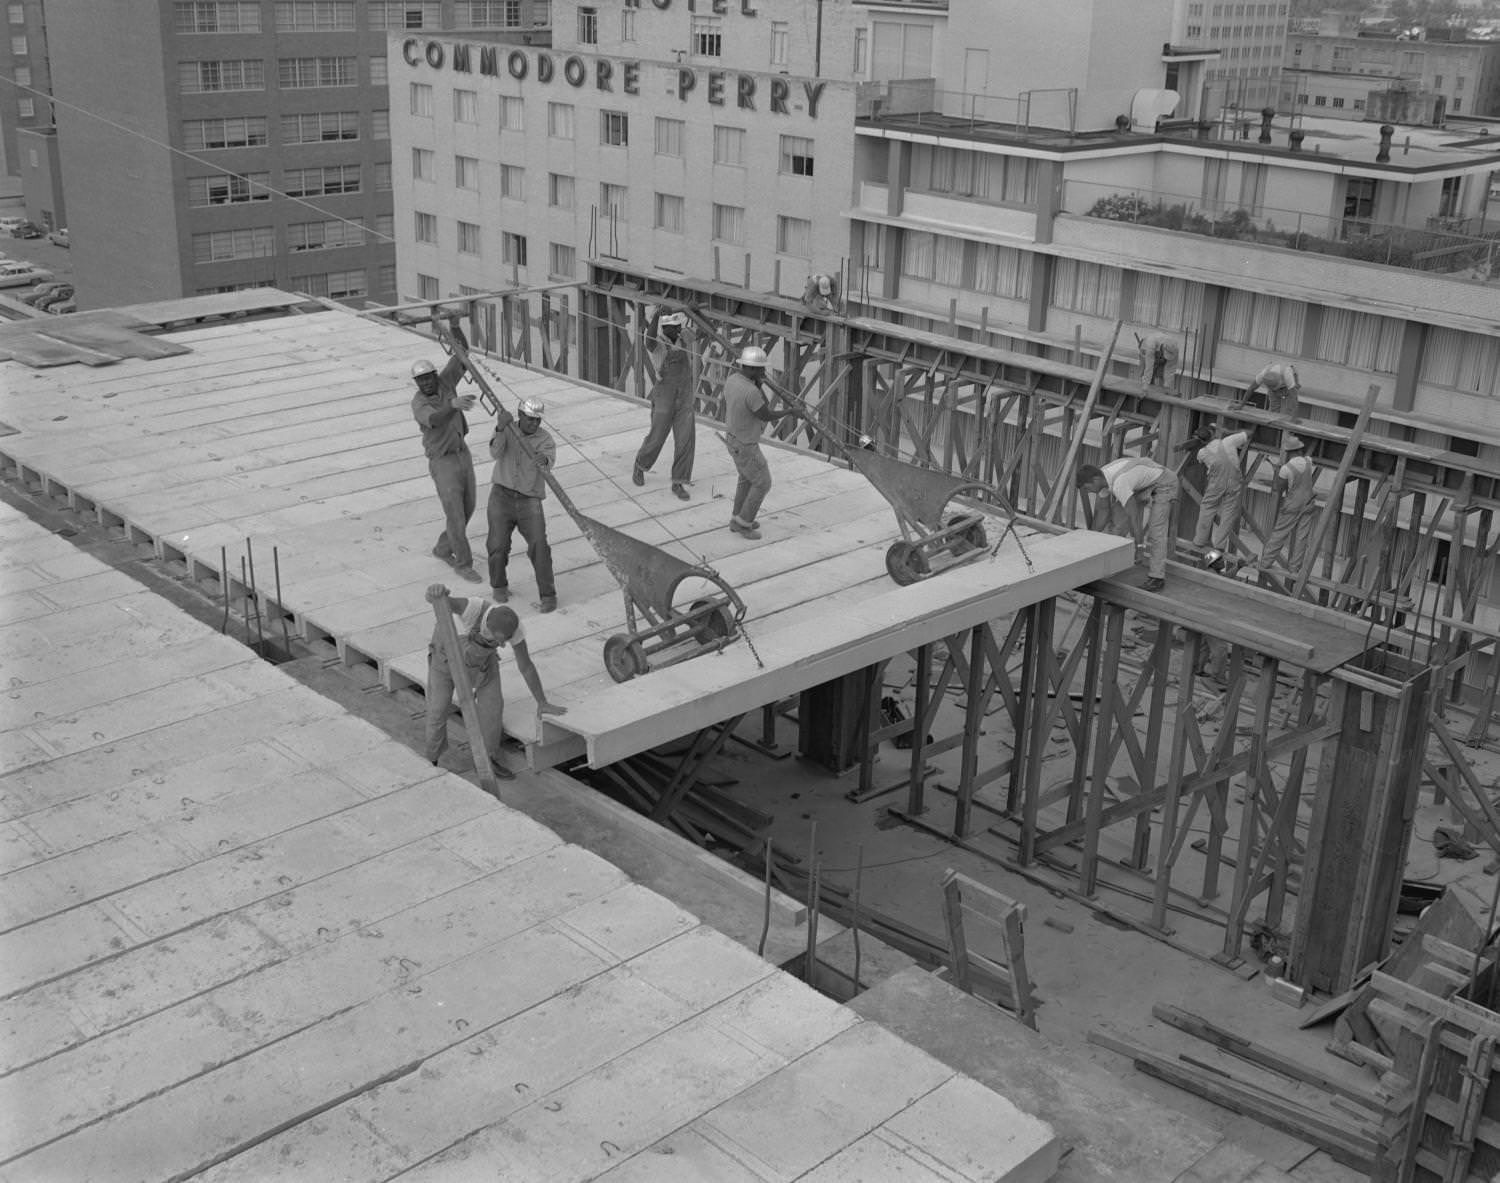 Workers on Platform, 1965